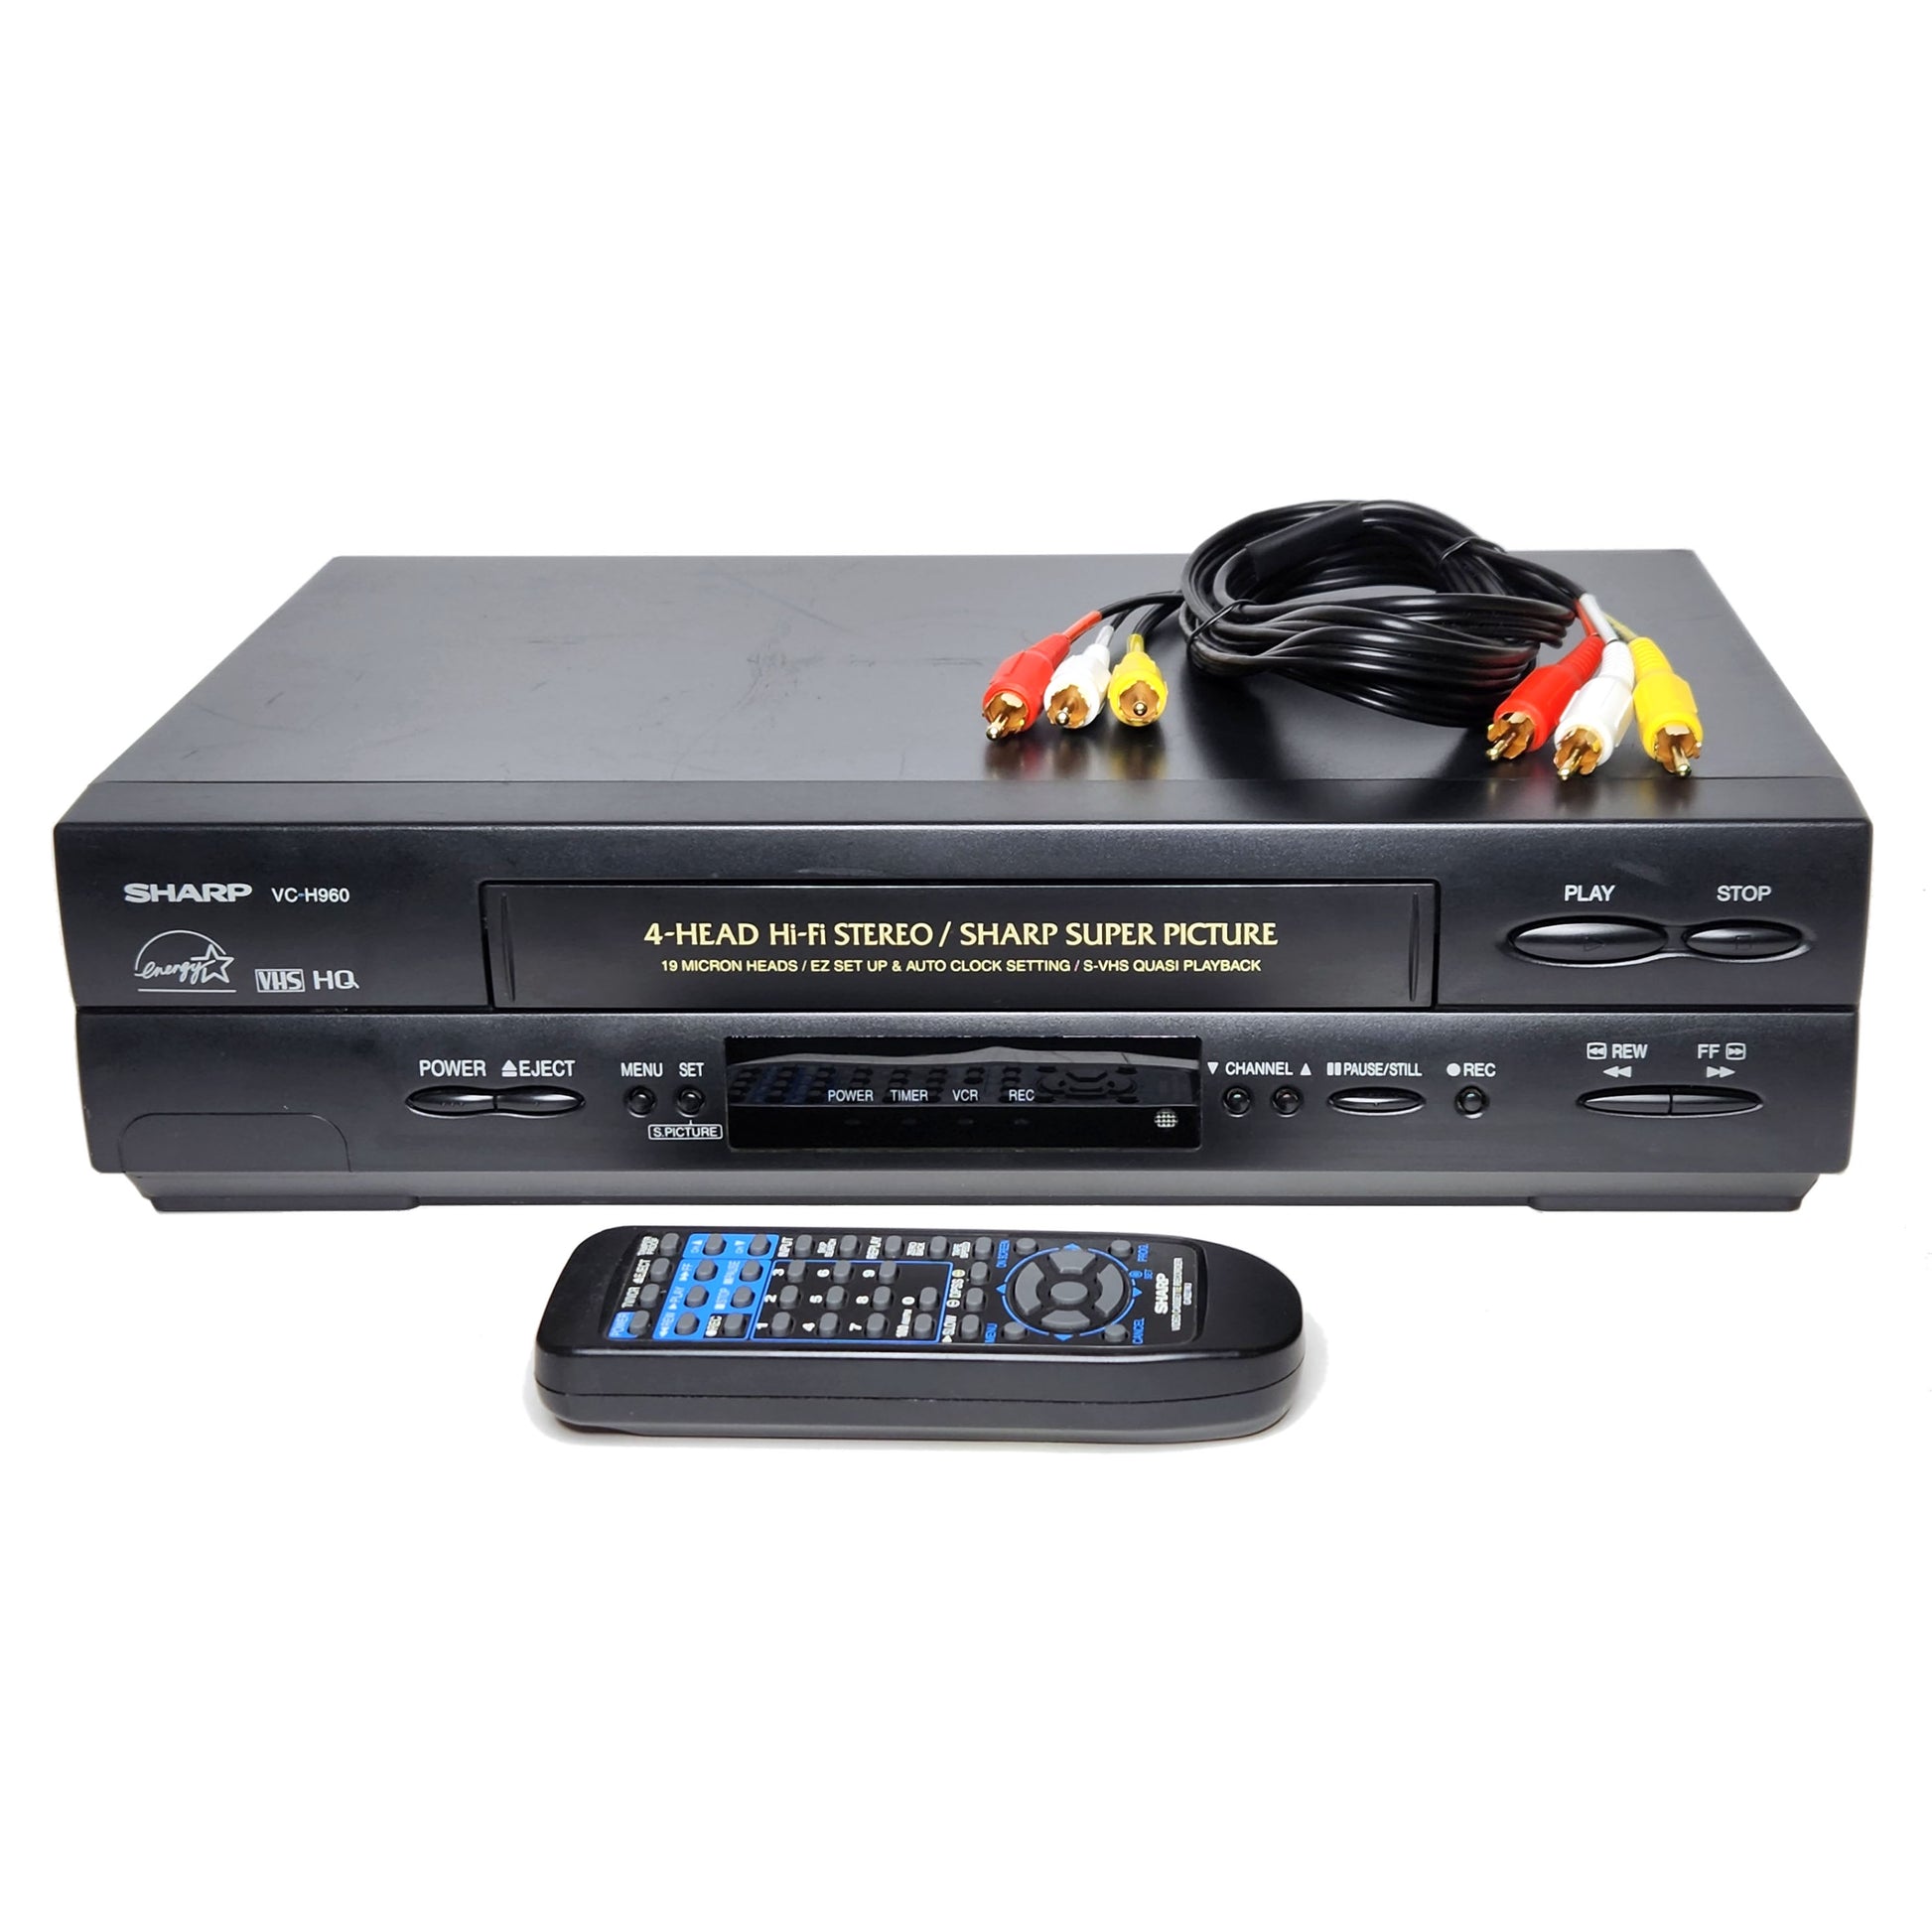 Sharp VC-H960U VCR, 4-Head Hi-Fi Stereo